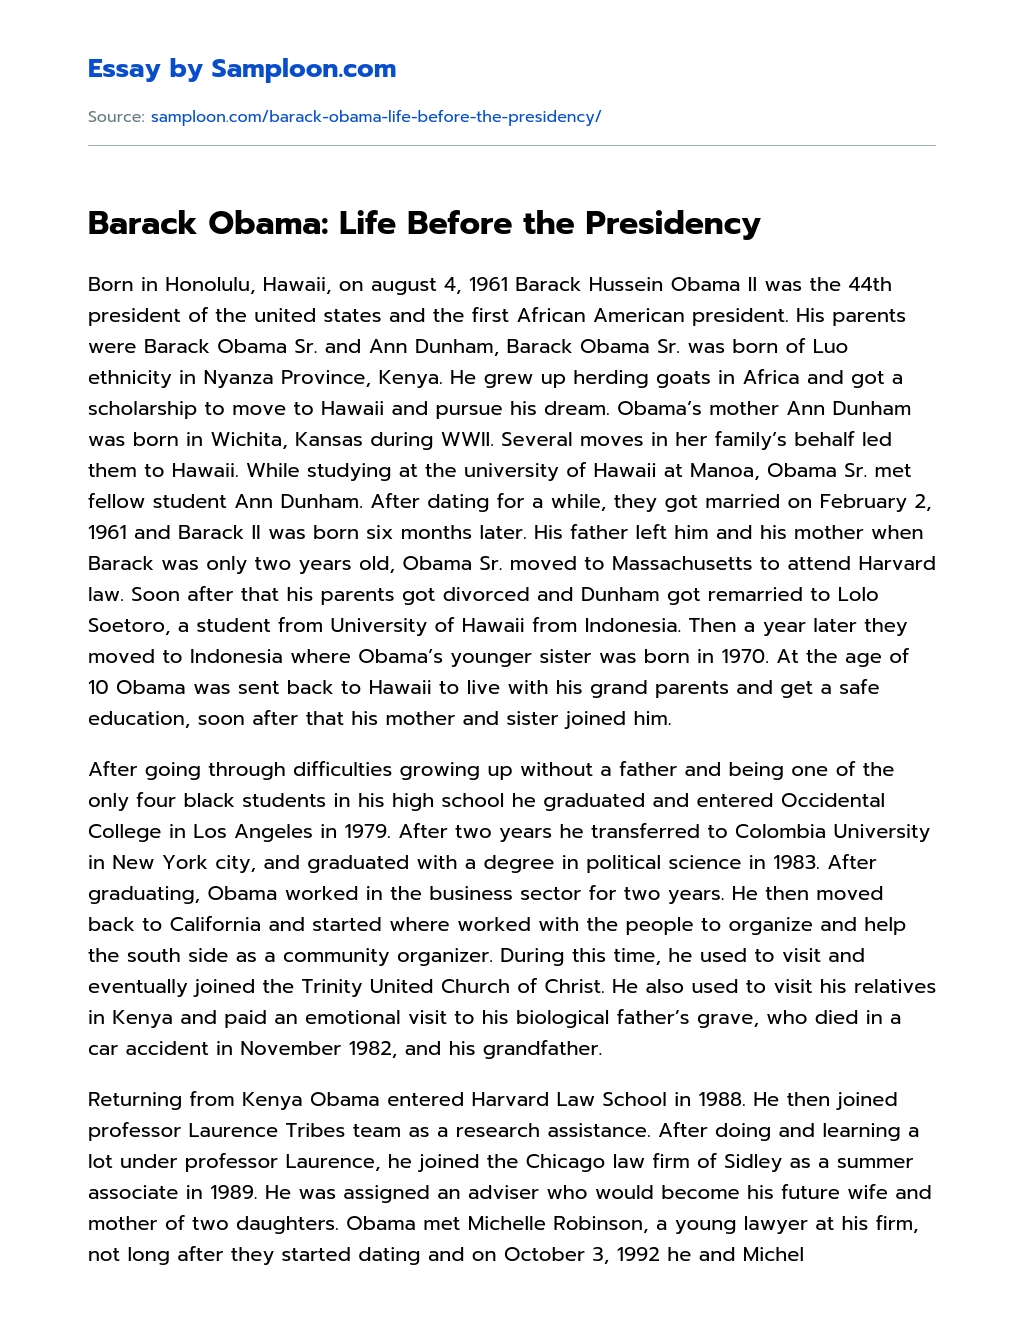 Barack Obama: Life Before the Presidency essay